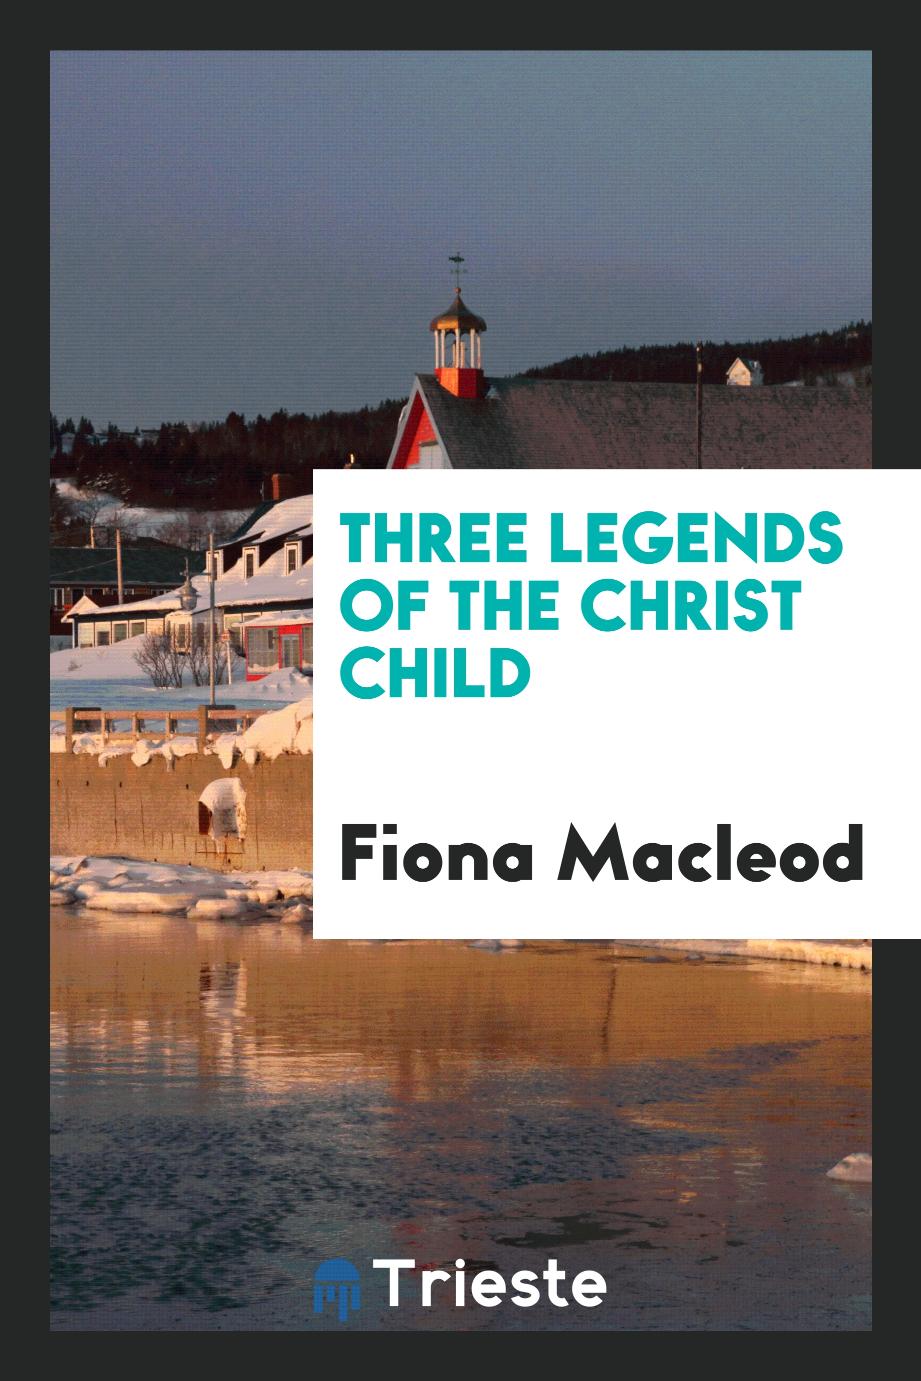 Three Legends of the Christ Child